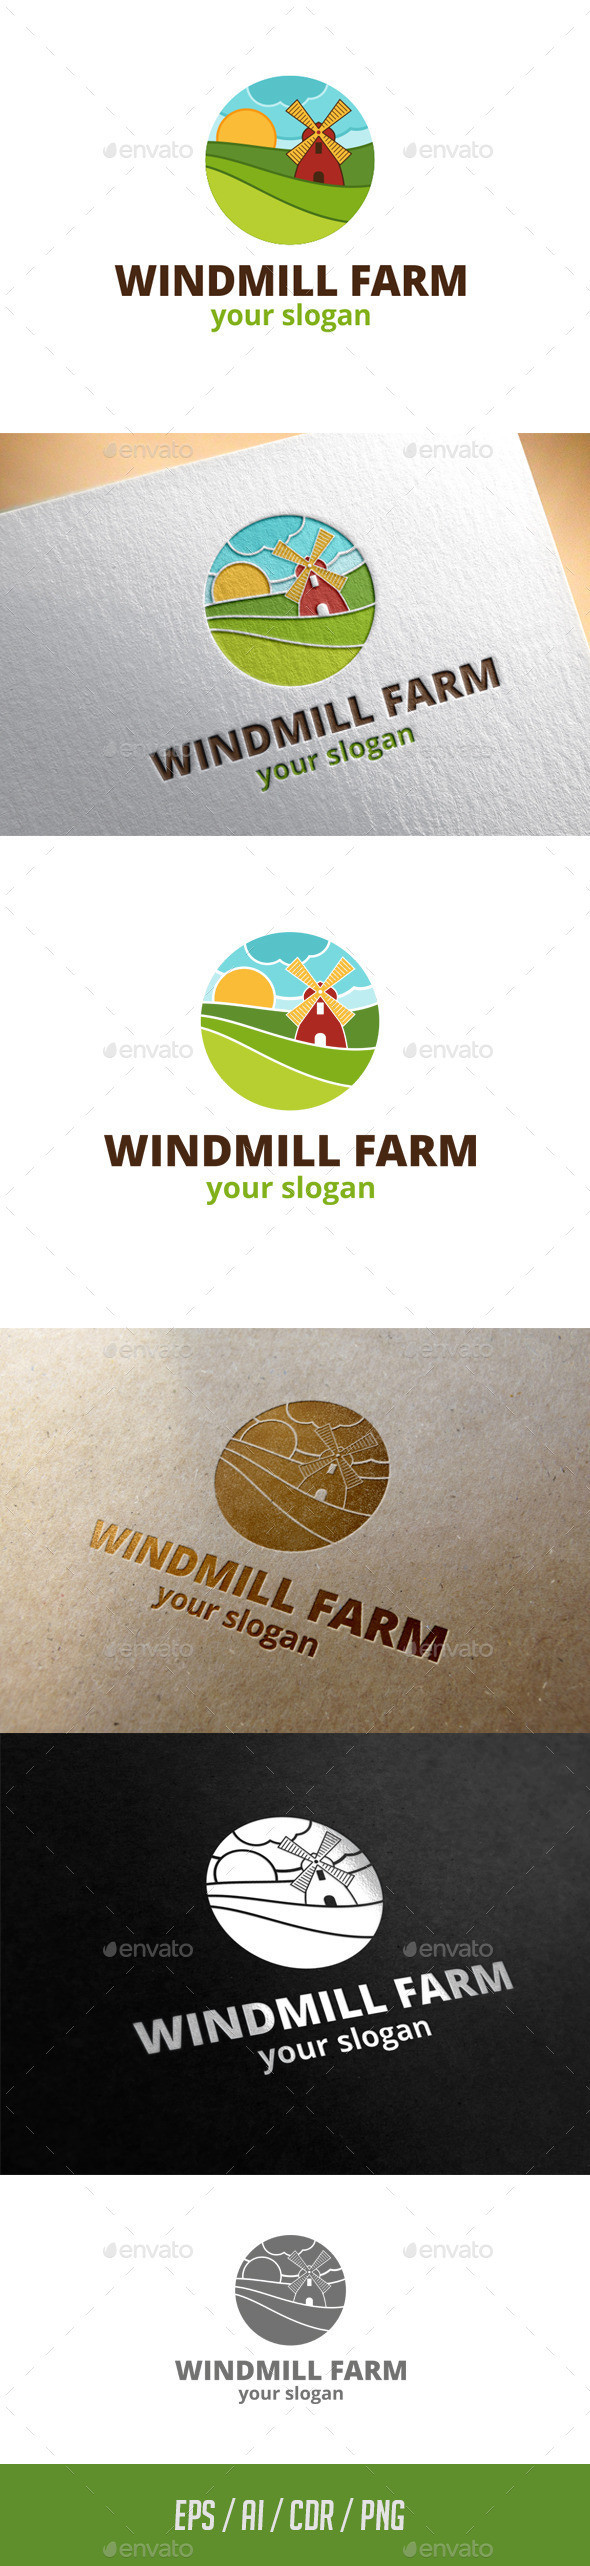 Windmill farm logo preview